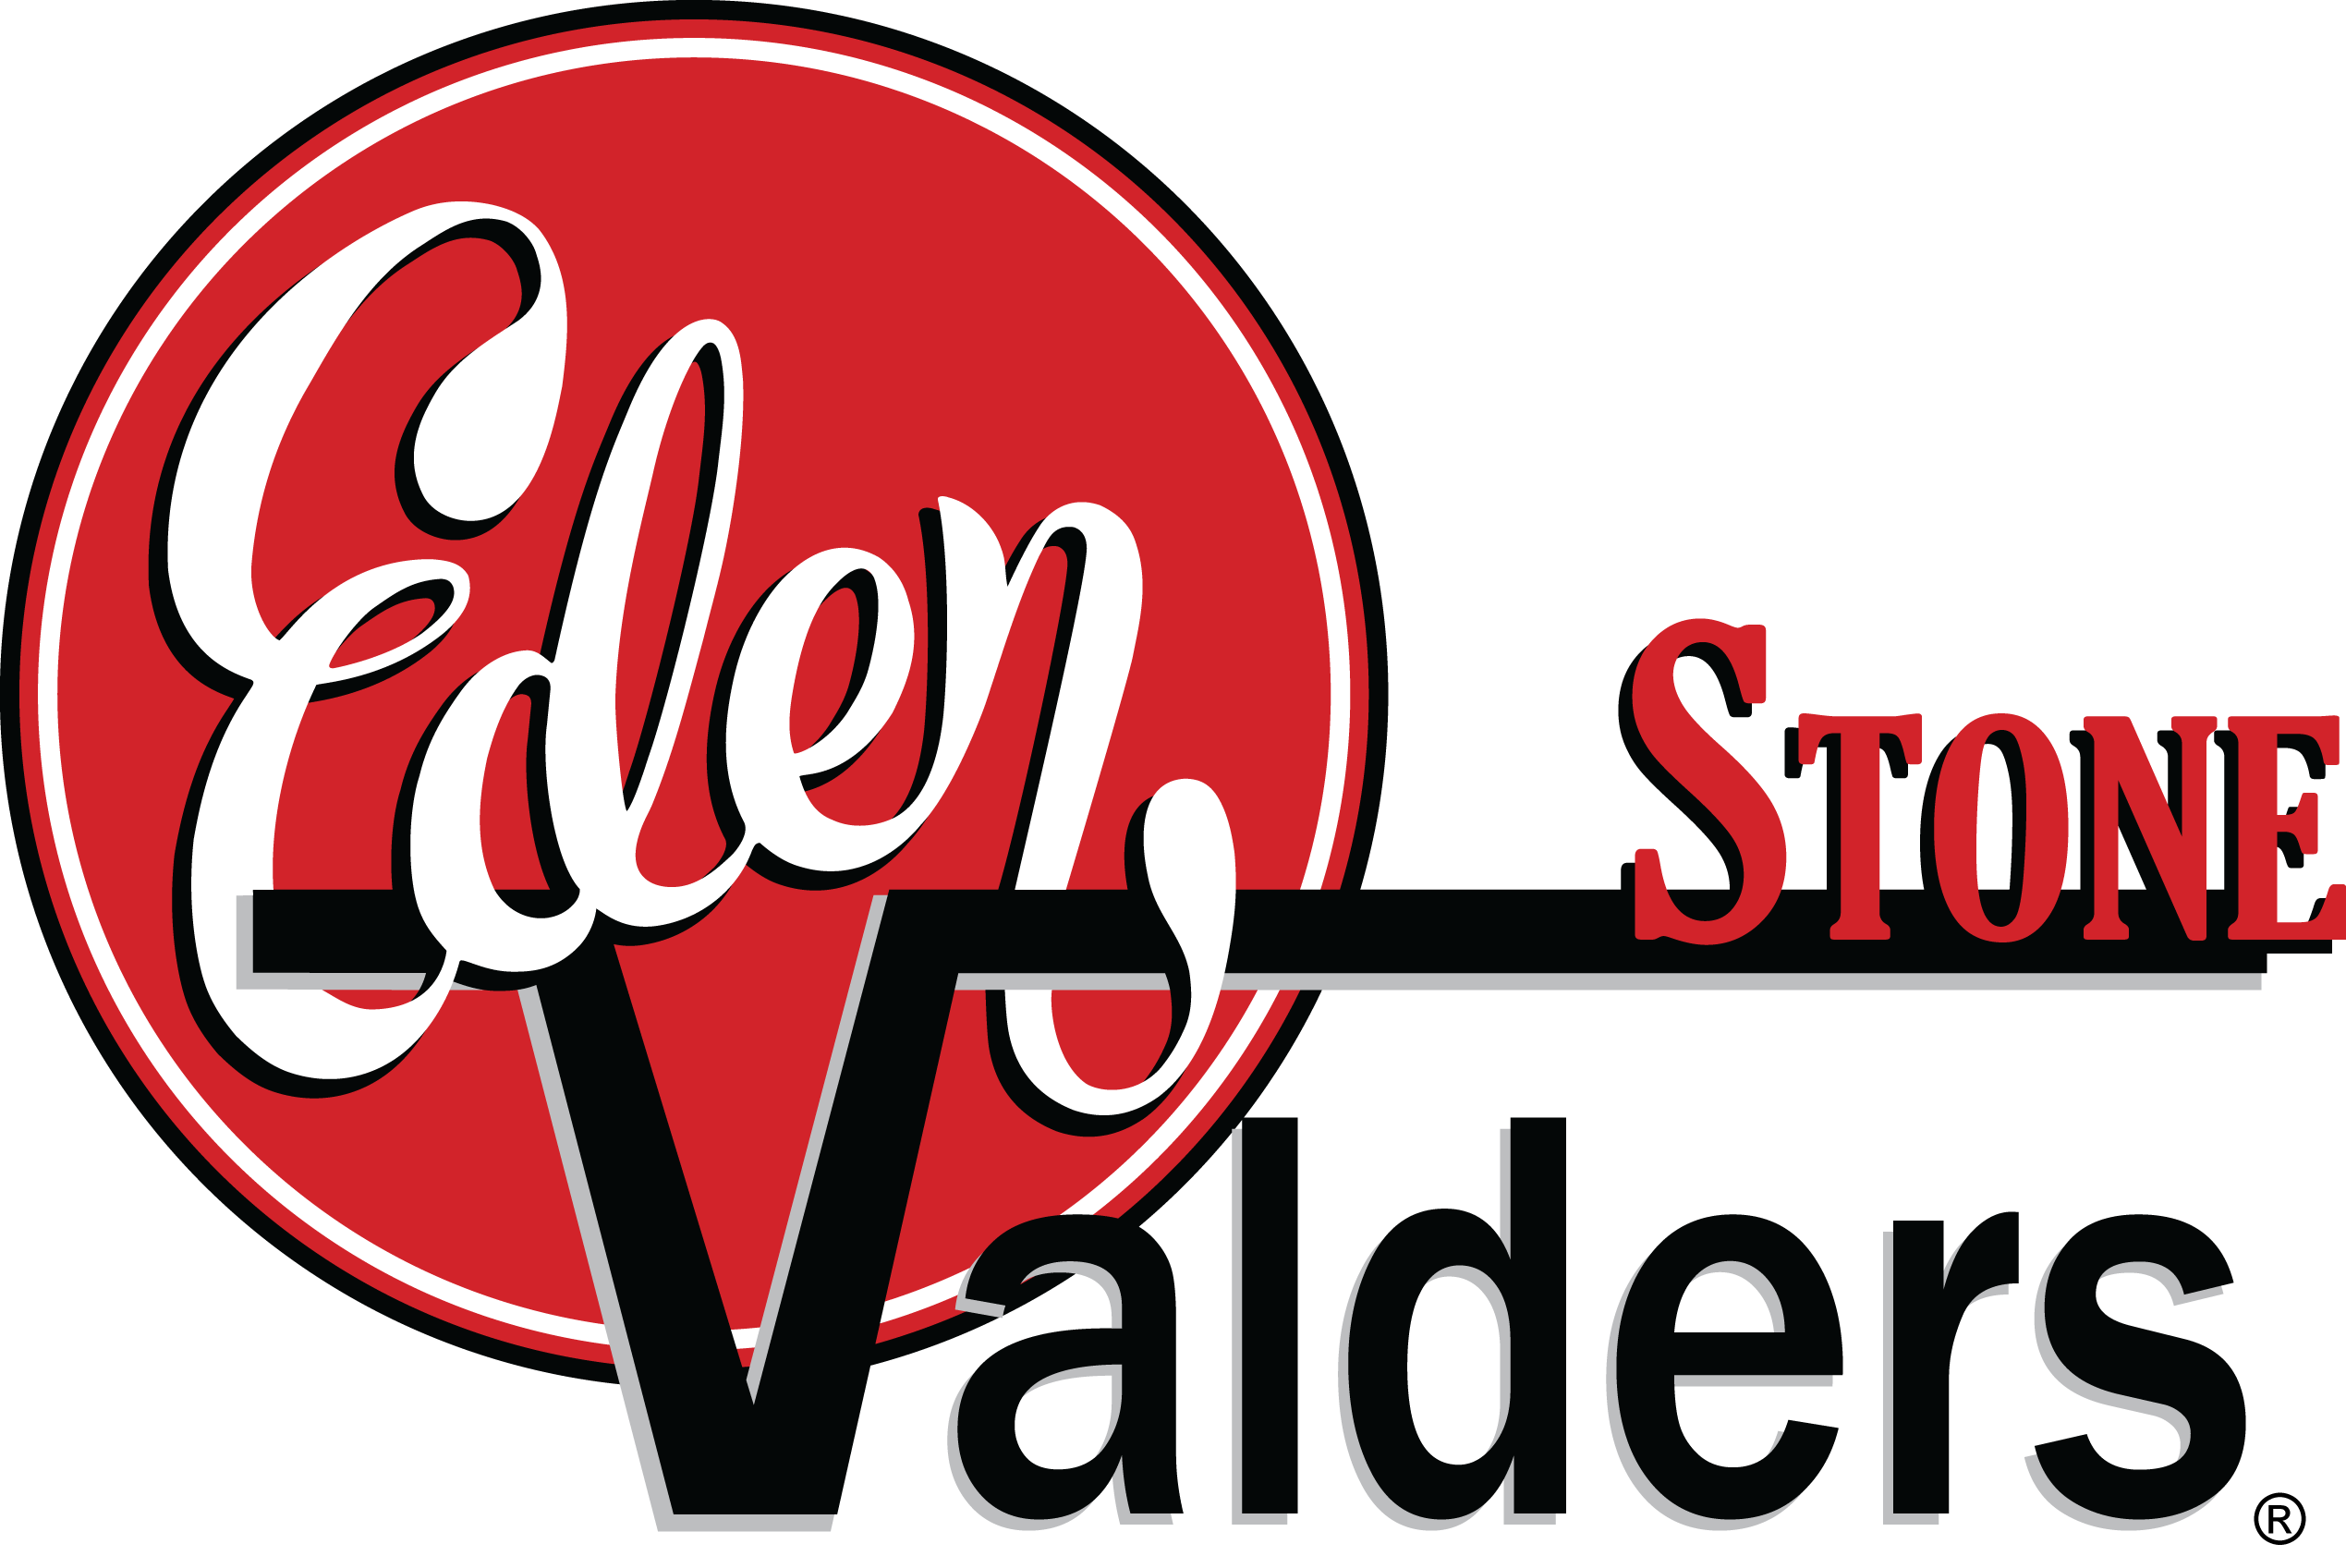 Eden Valders Stone